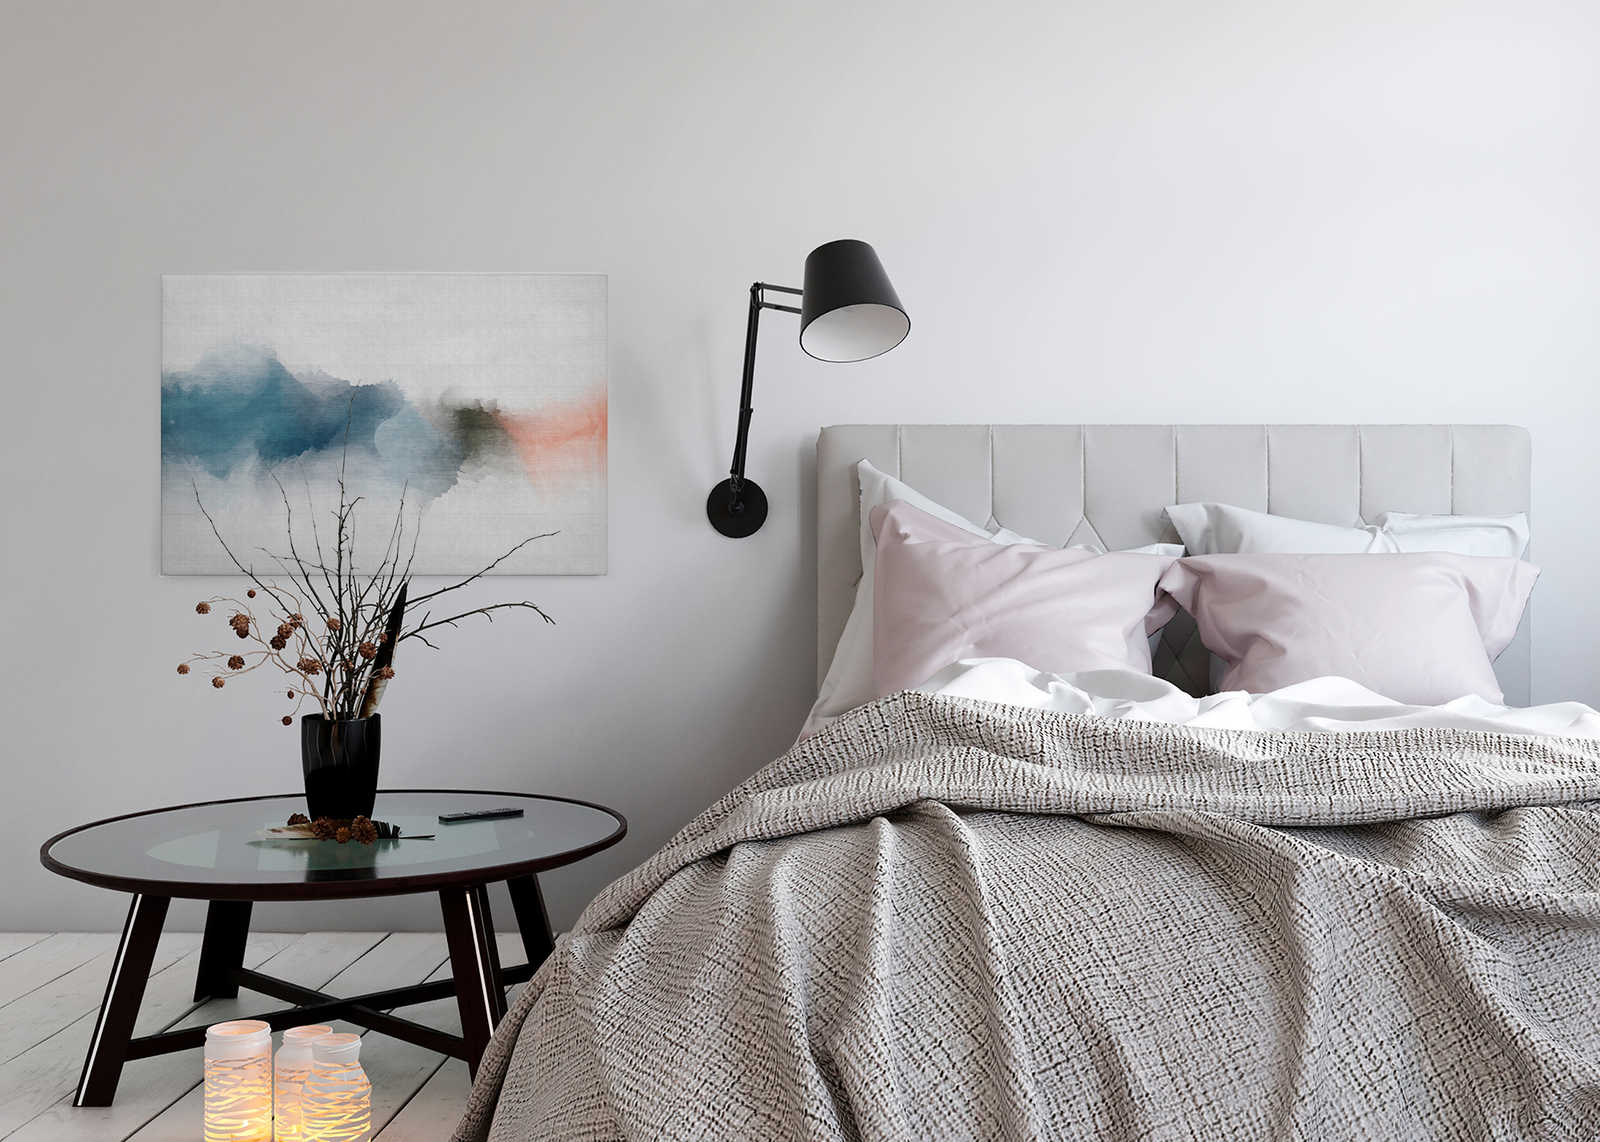             Daydream 1 - Pintura minimalista en lienzo estilo acuarela - Textura de lino natural - 0,90 m x 0,60 m
        